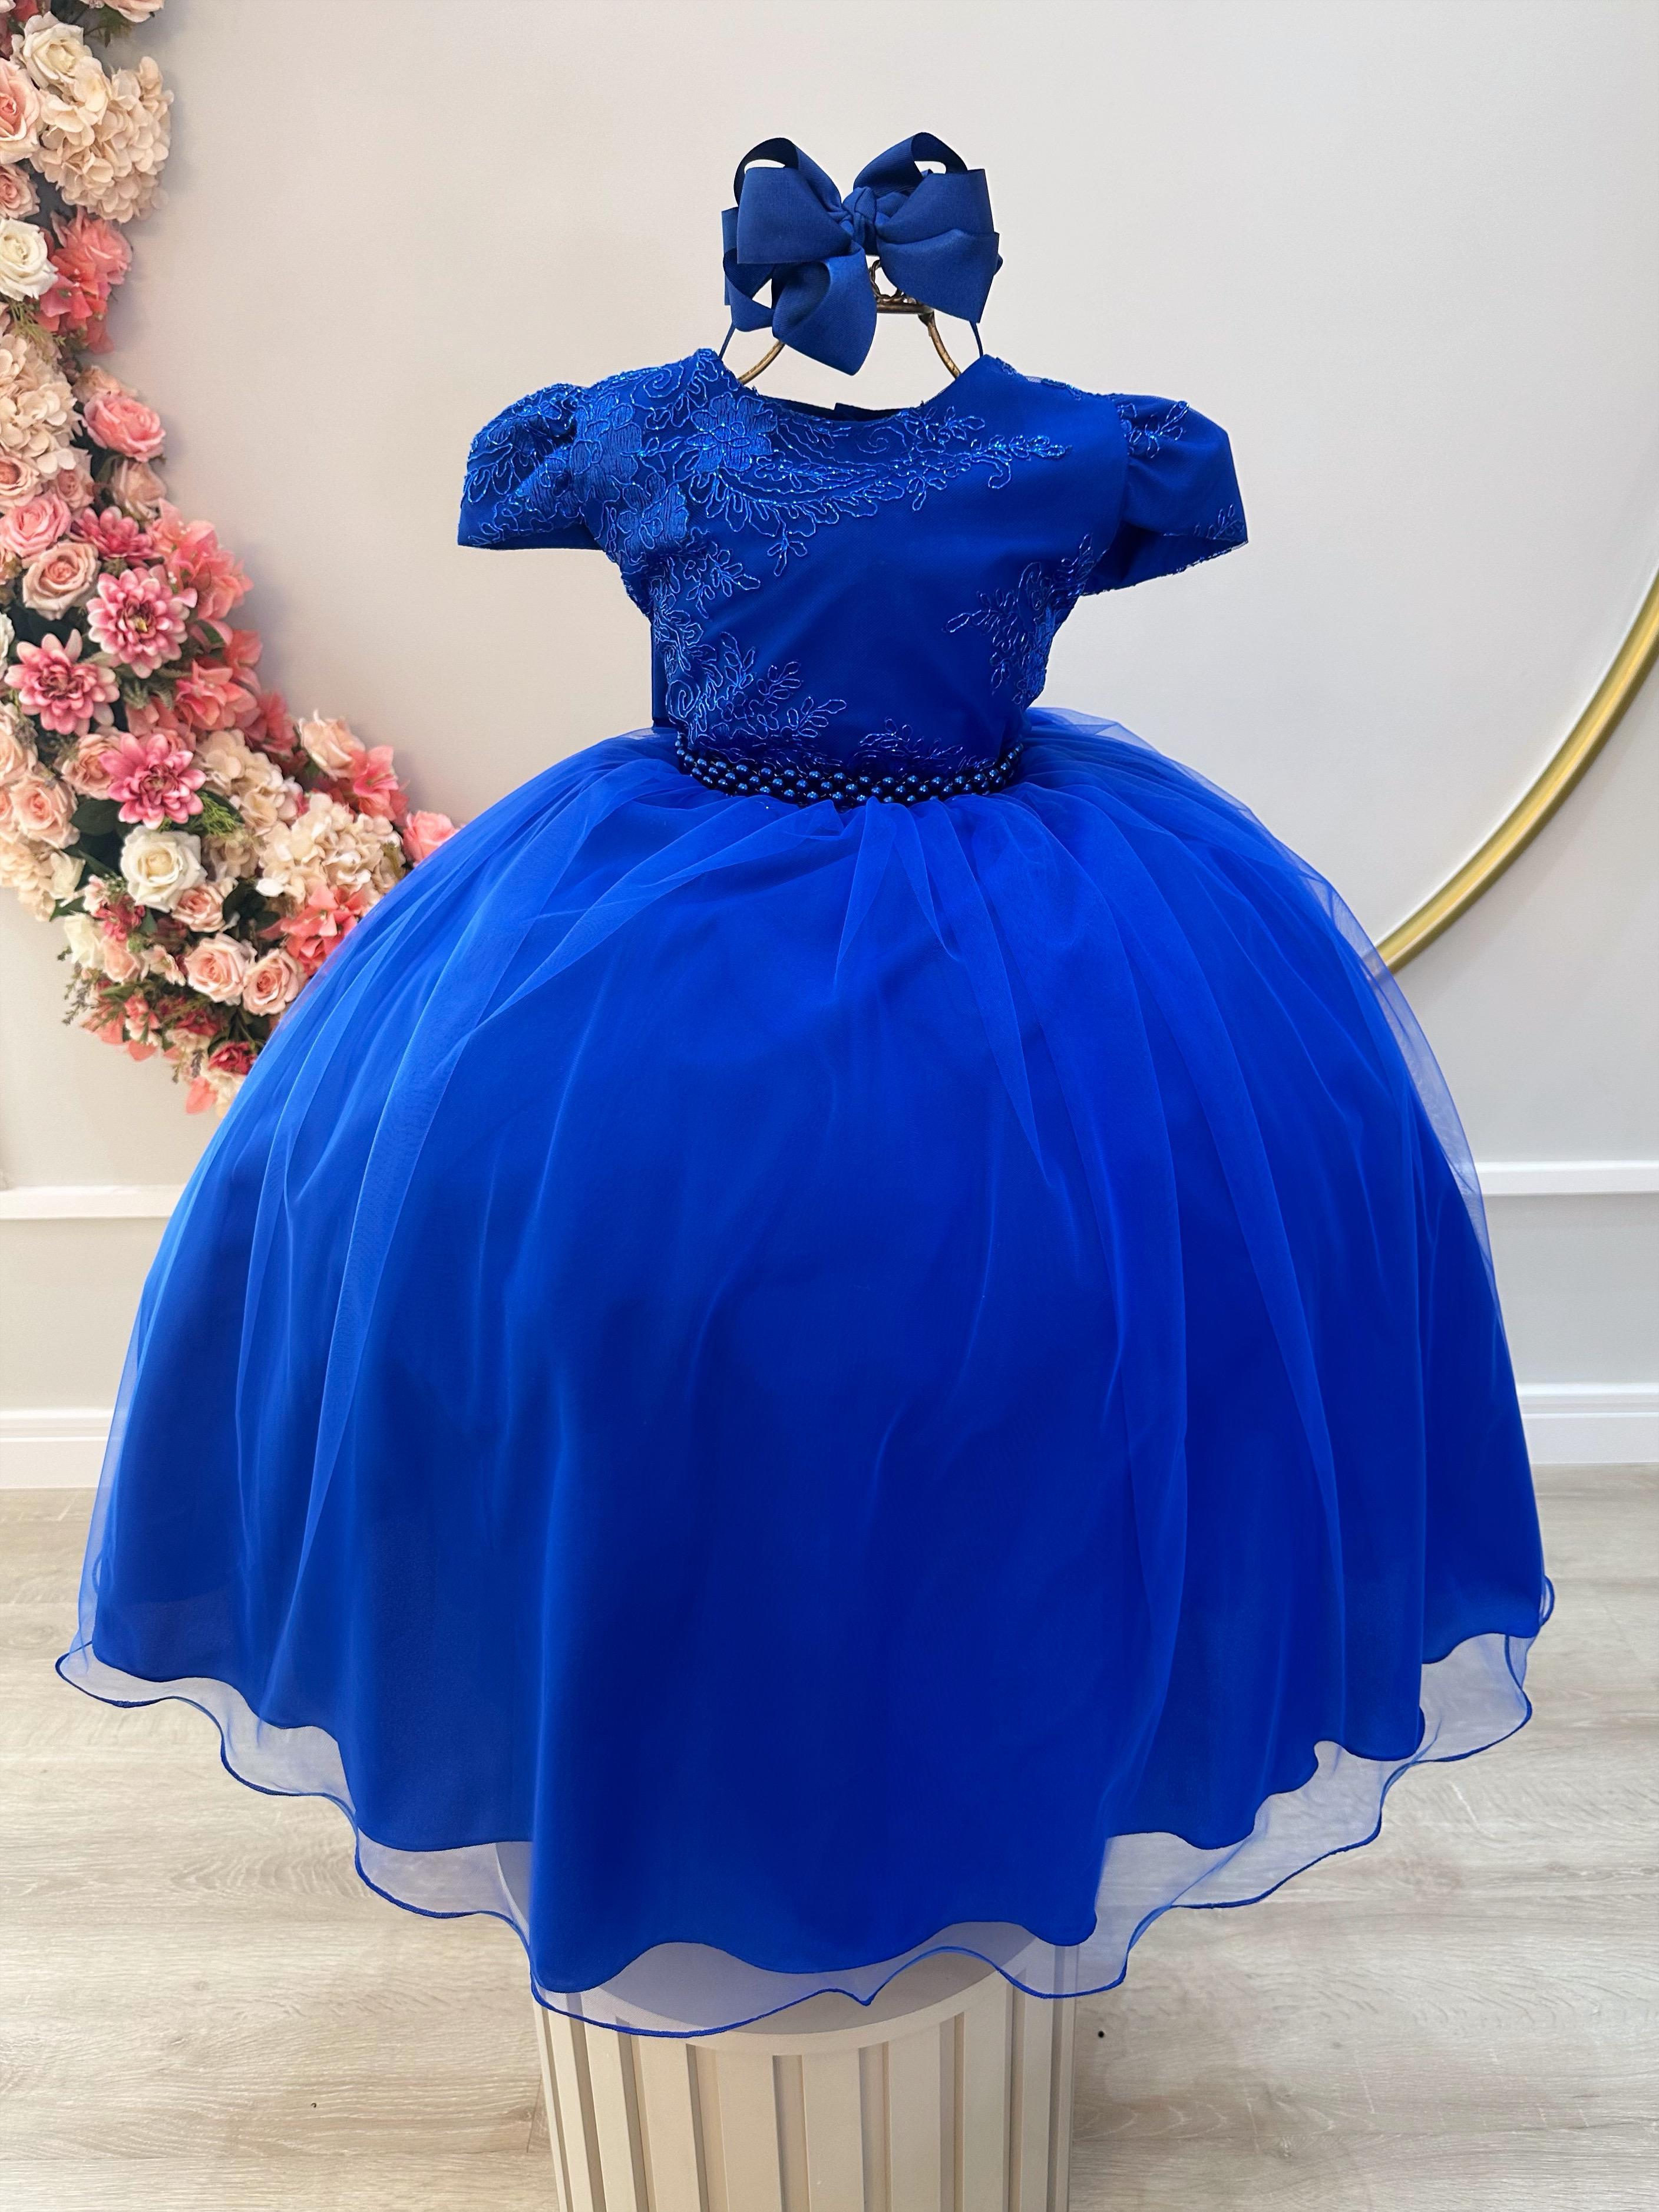 Vestido Infantil Azul Royal Damas Luxo C/ Renda Metalizada